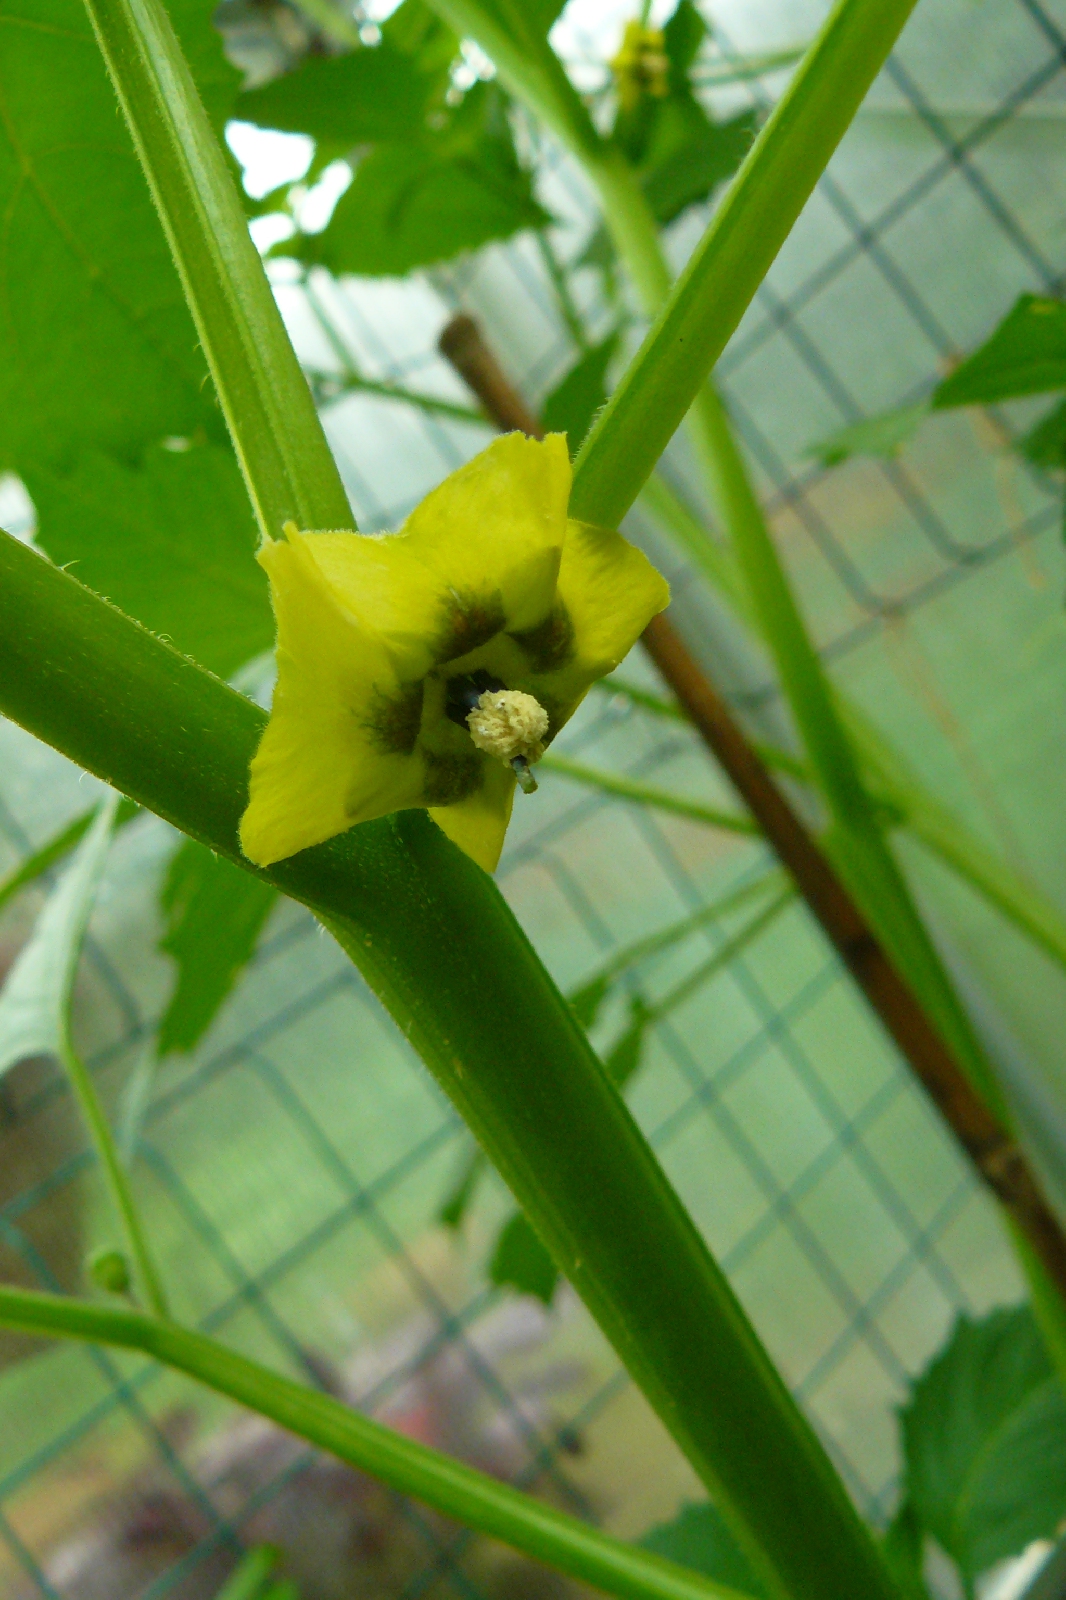 Tomatillo (Physalis philadelphica Lam., Syn.: Physalis ixocarpa Brot. ex DC., Physalis aequata J. Jacq. ex Nees)